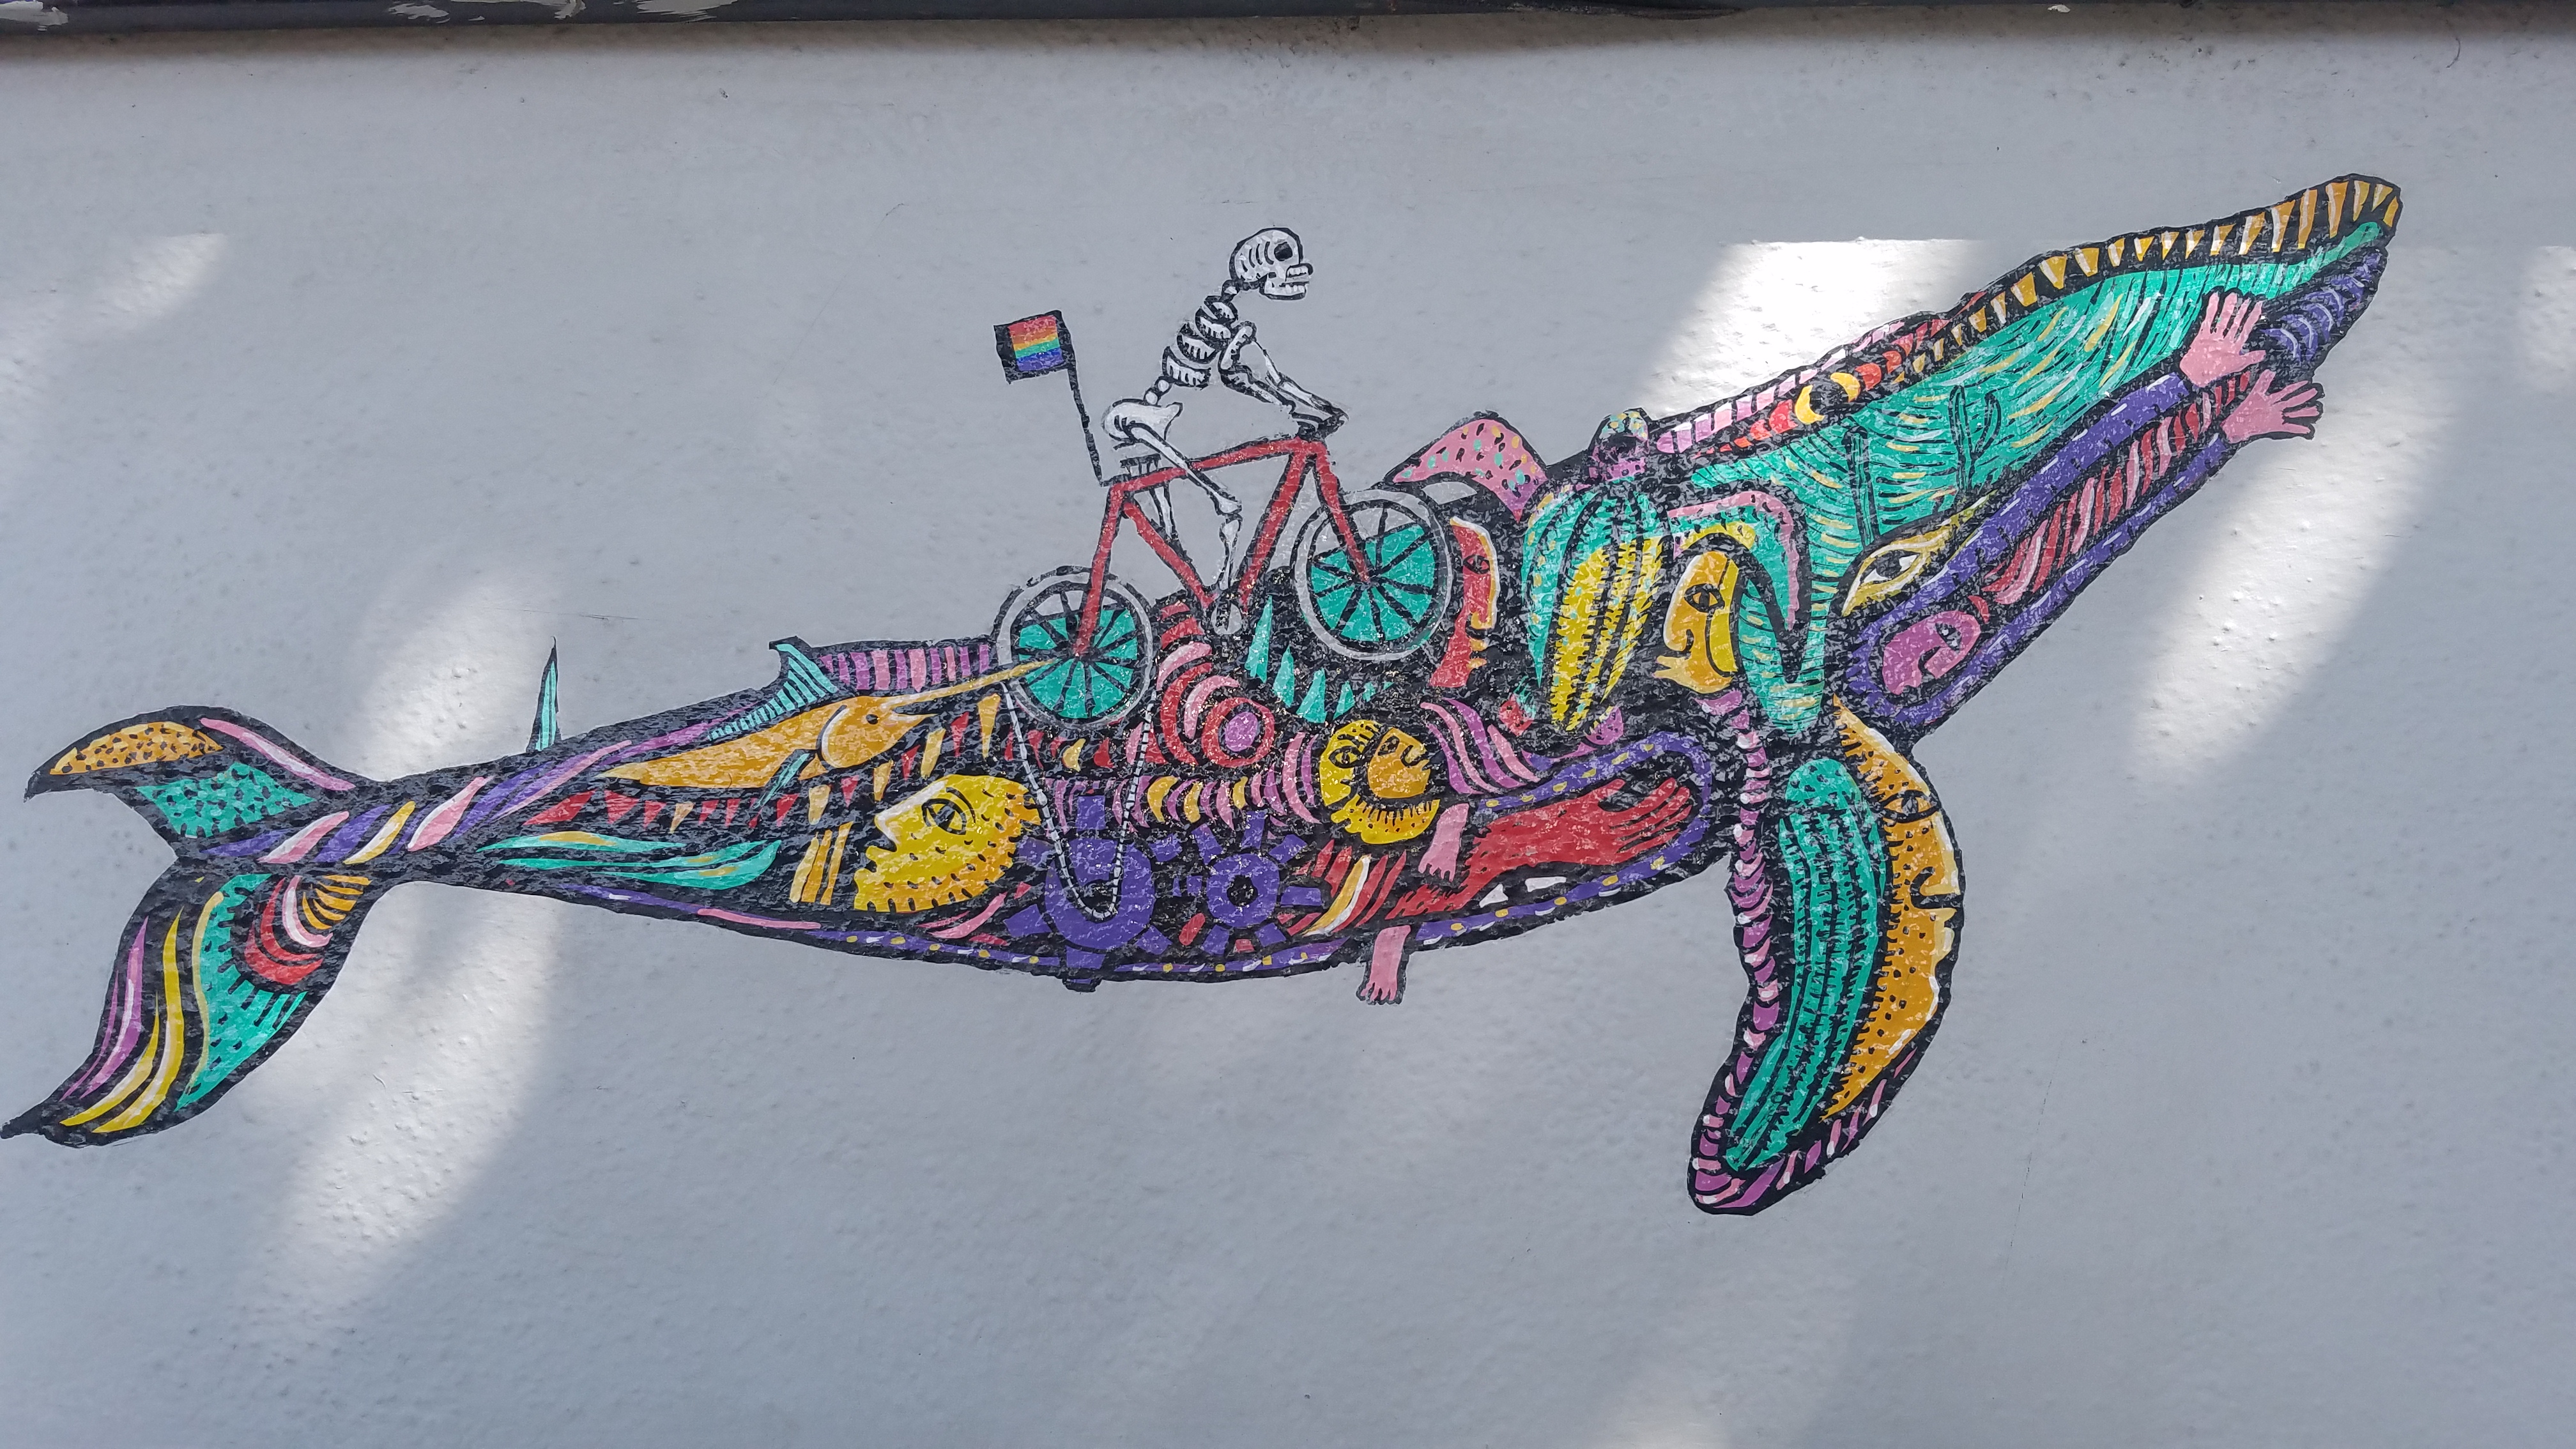 La Paz mural project